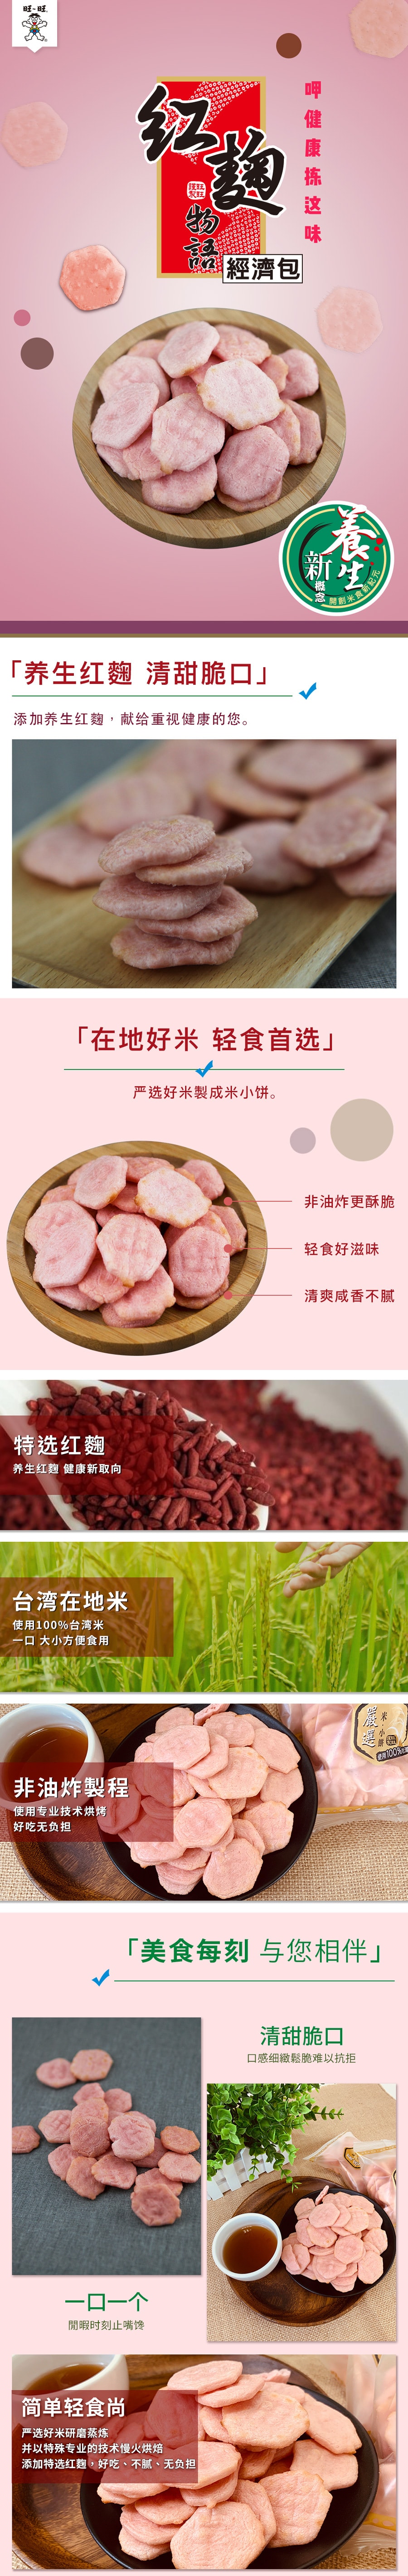 Taiwan Rice Crackers Senbei With Red Yeast Flavor - Share Pack【Vegan】240g*7 Packs 1680g